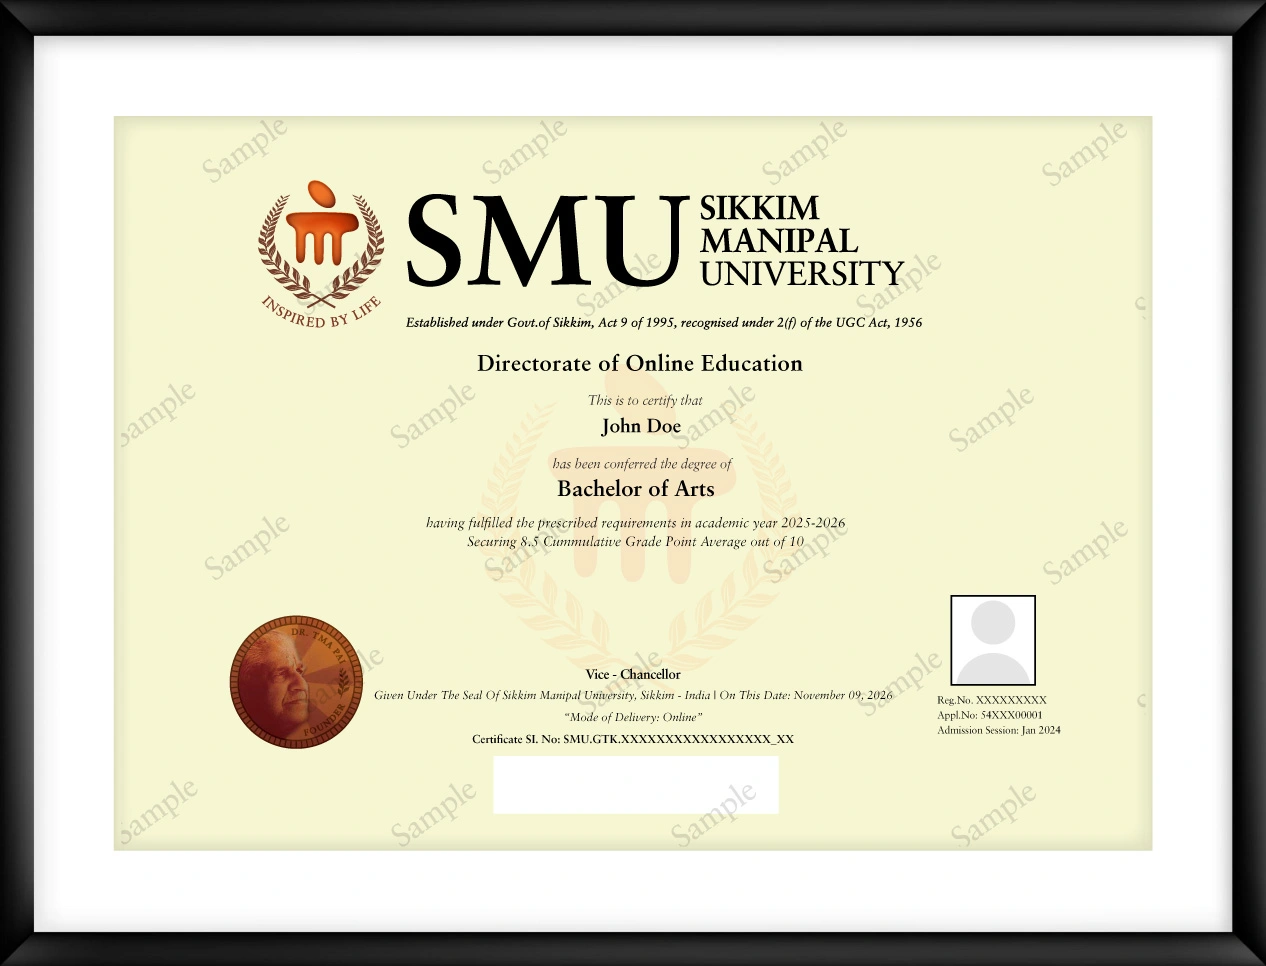 sikkim manipal university sample certificate